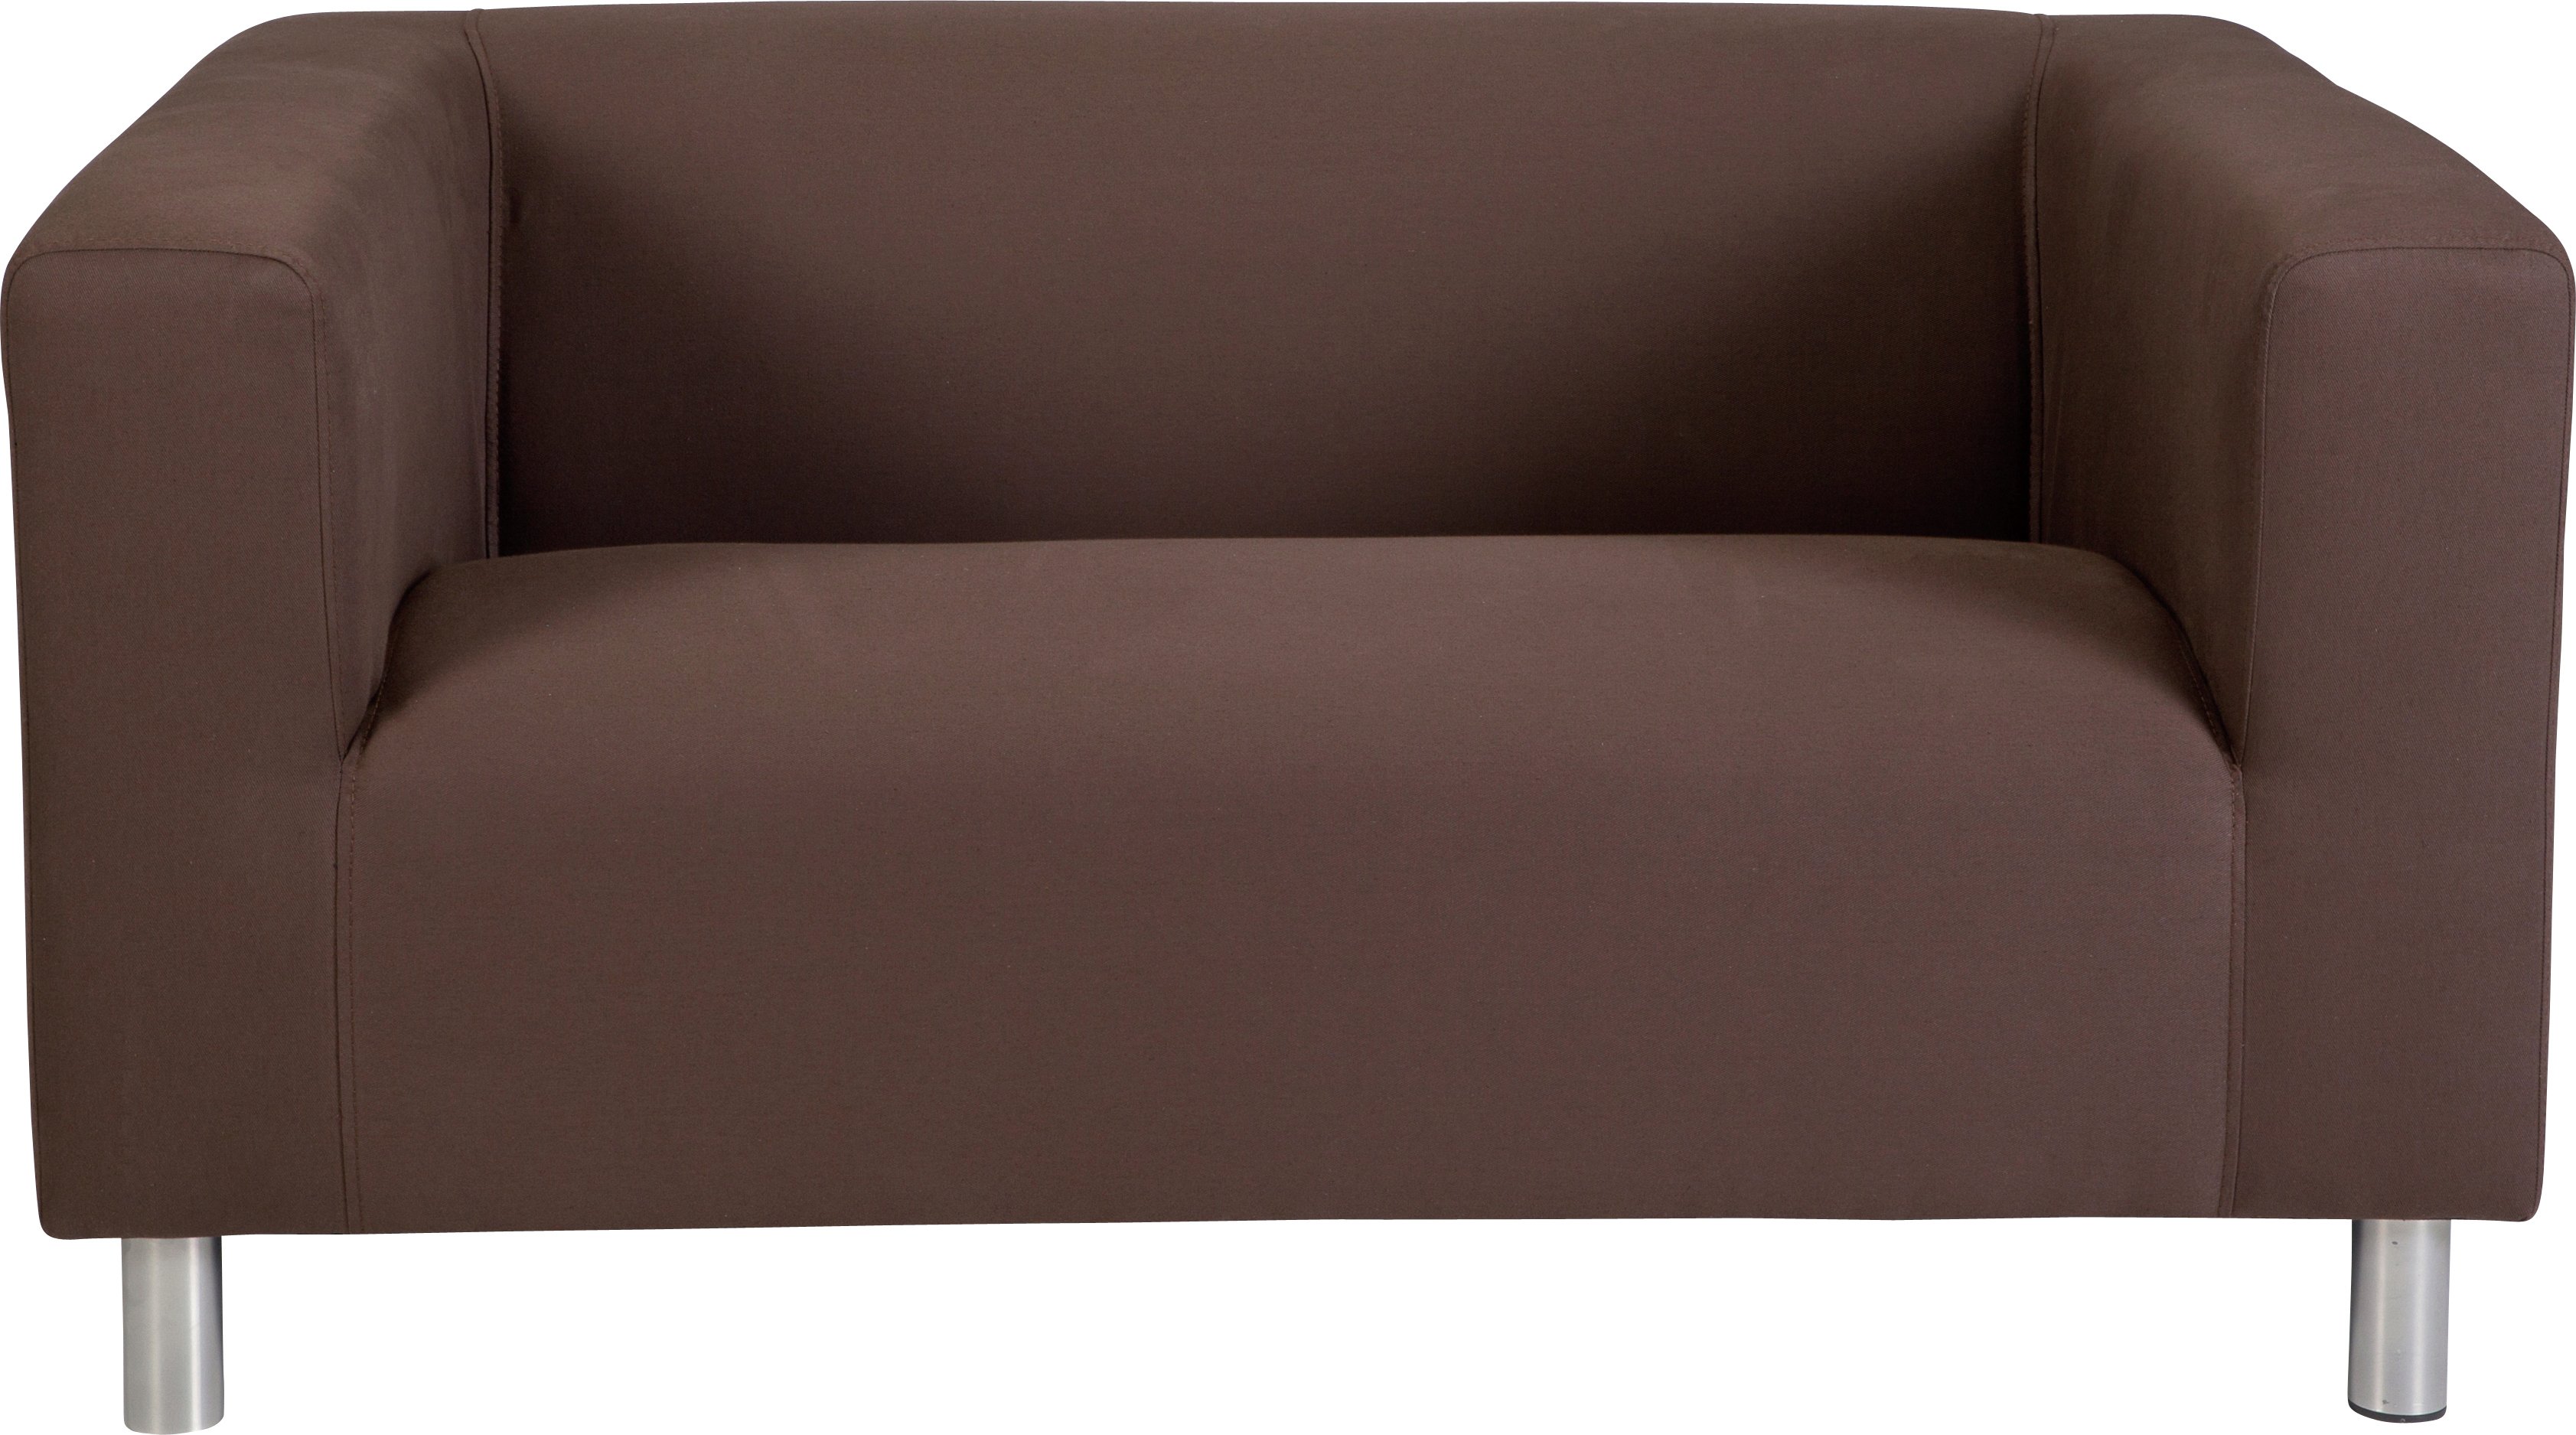 Argos Home Moda Compact 2 Seater Fabric Sofa - Chocolate